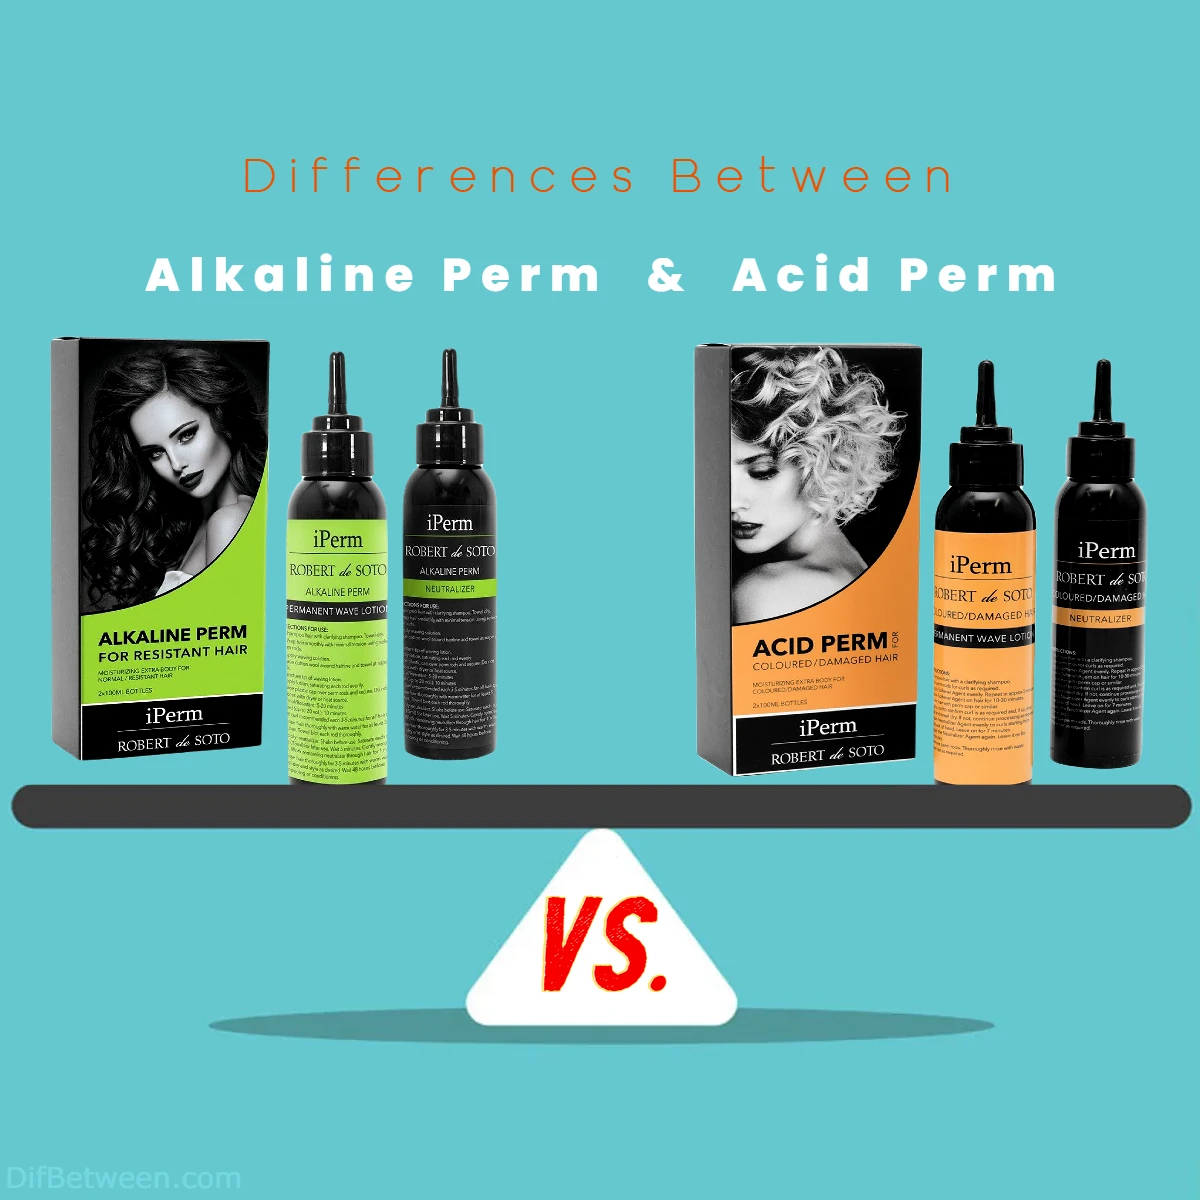 Differences Between Alkaline Perm vs Acid Perm